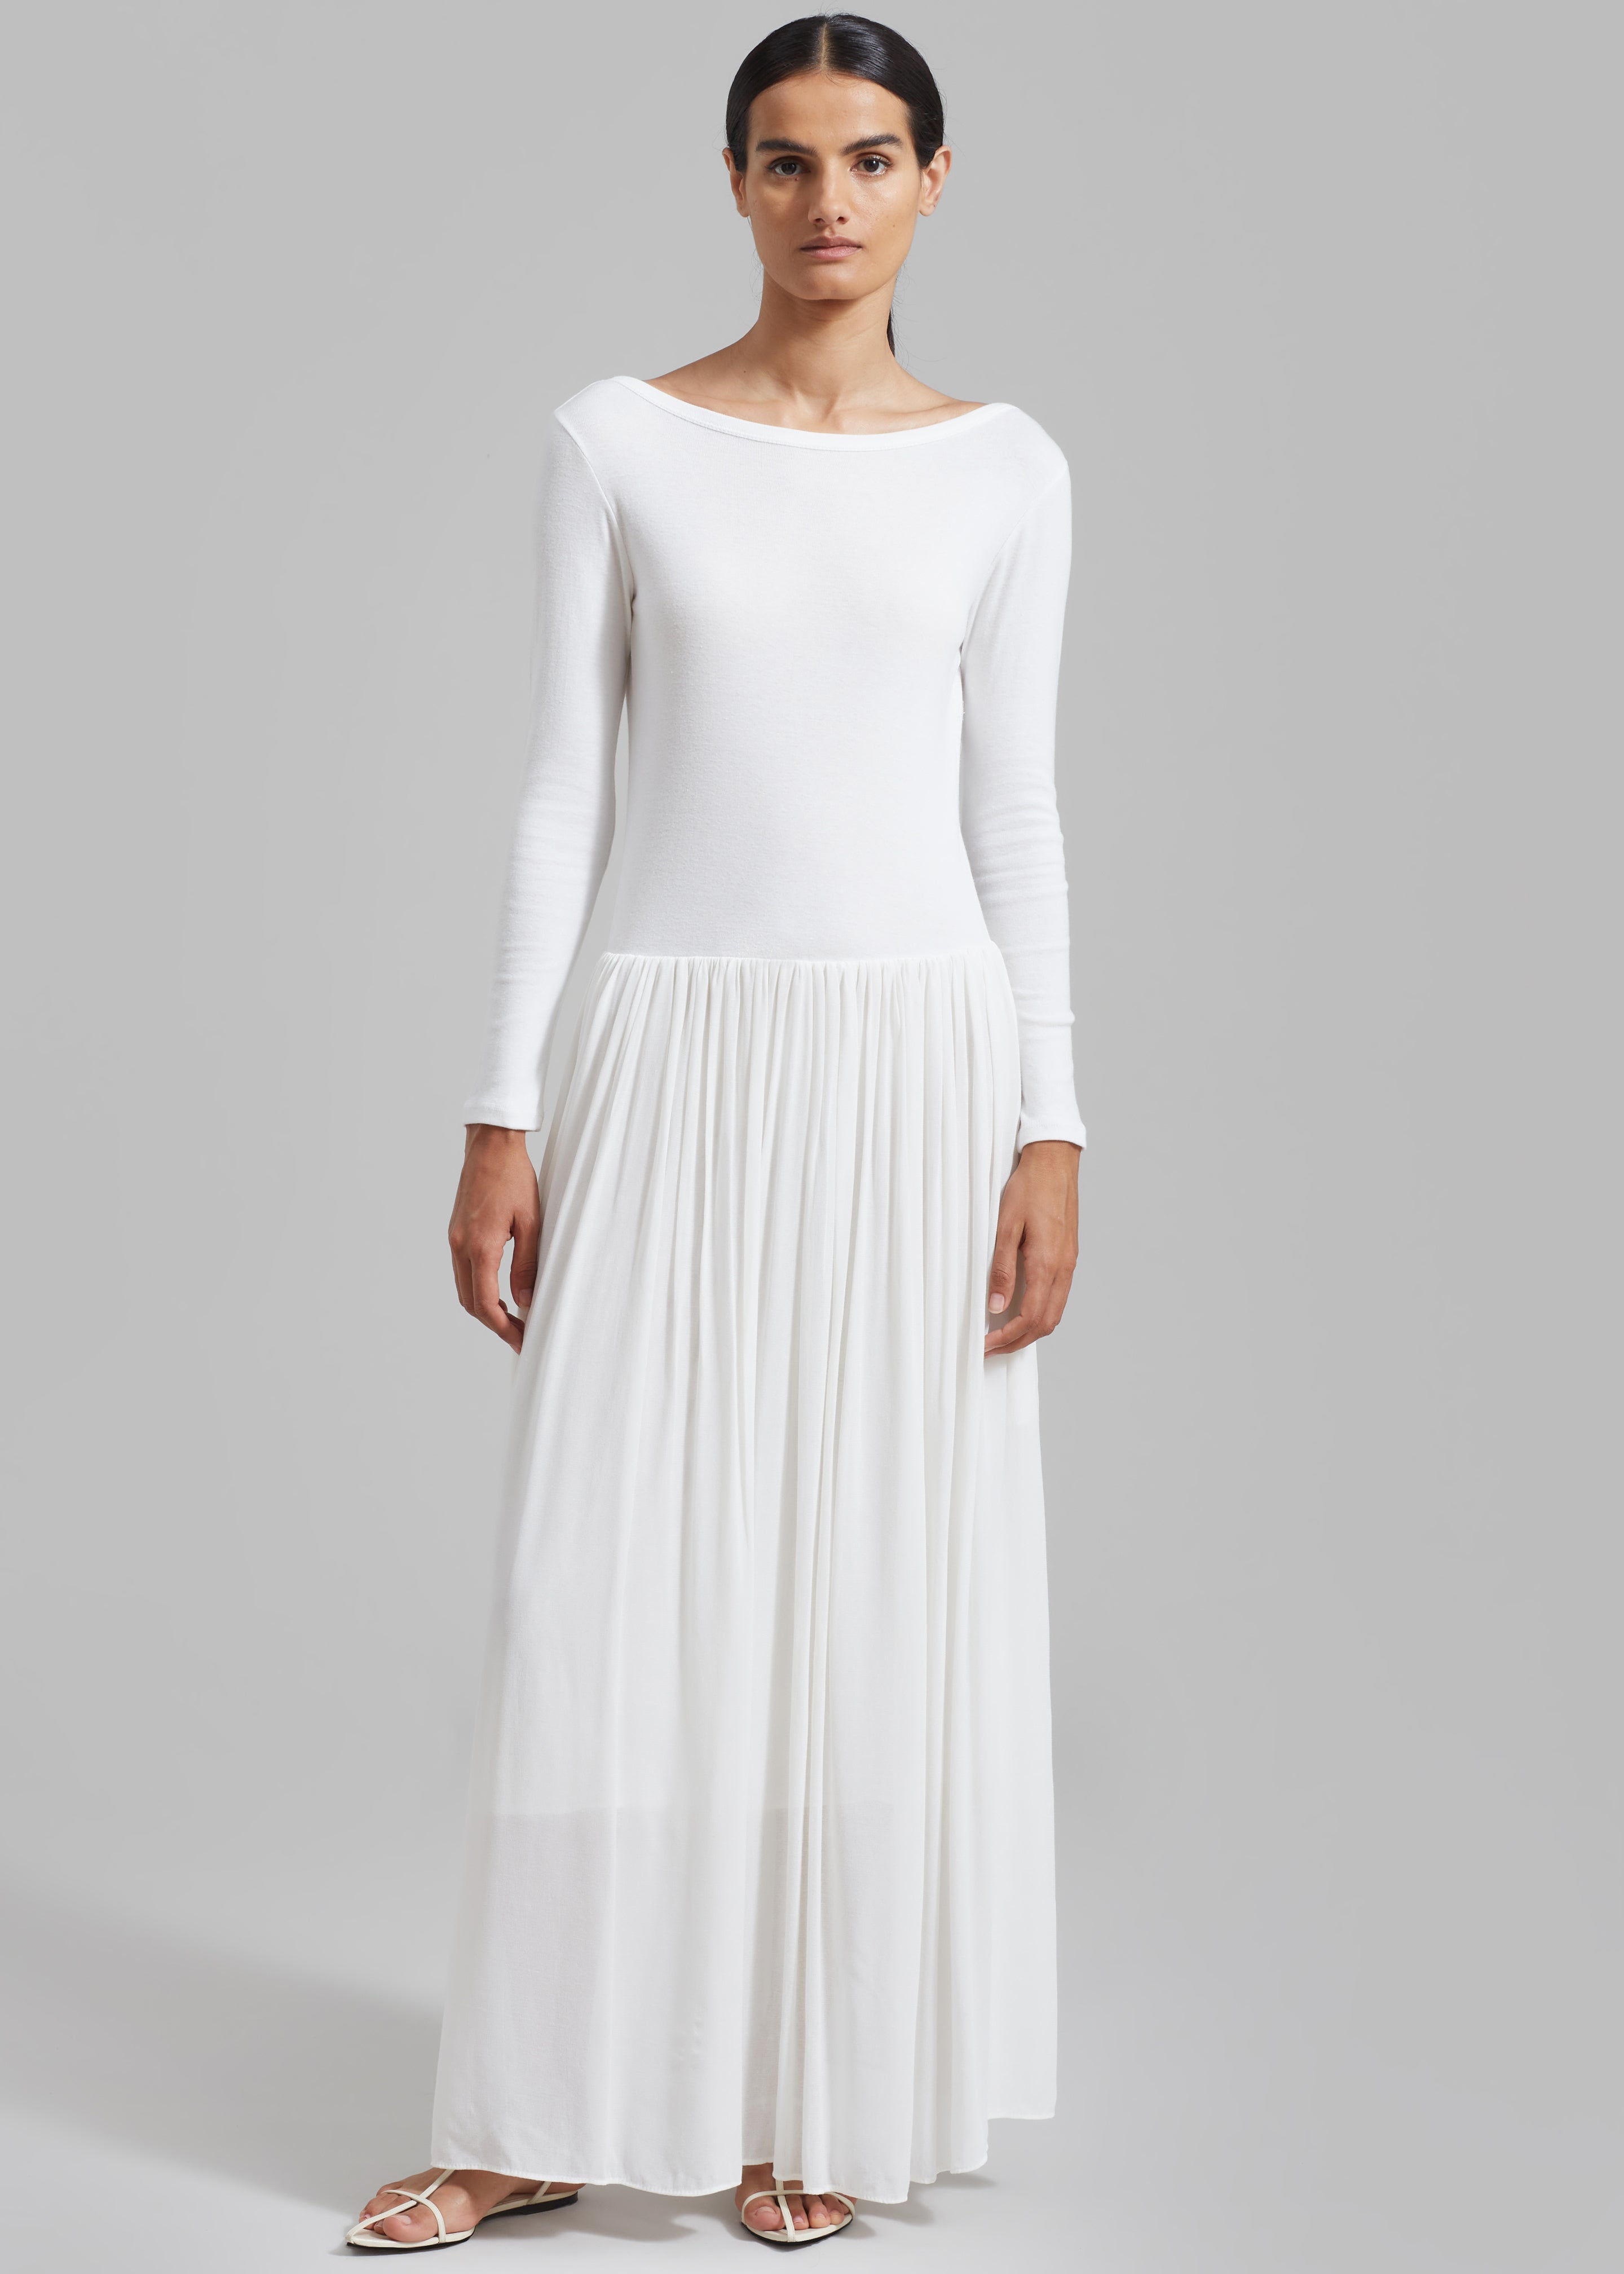 Odette Gathered Skirt Maxi Dress - White - 8